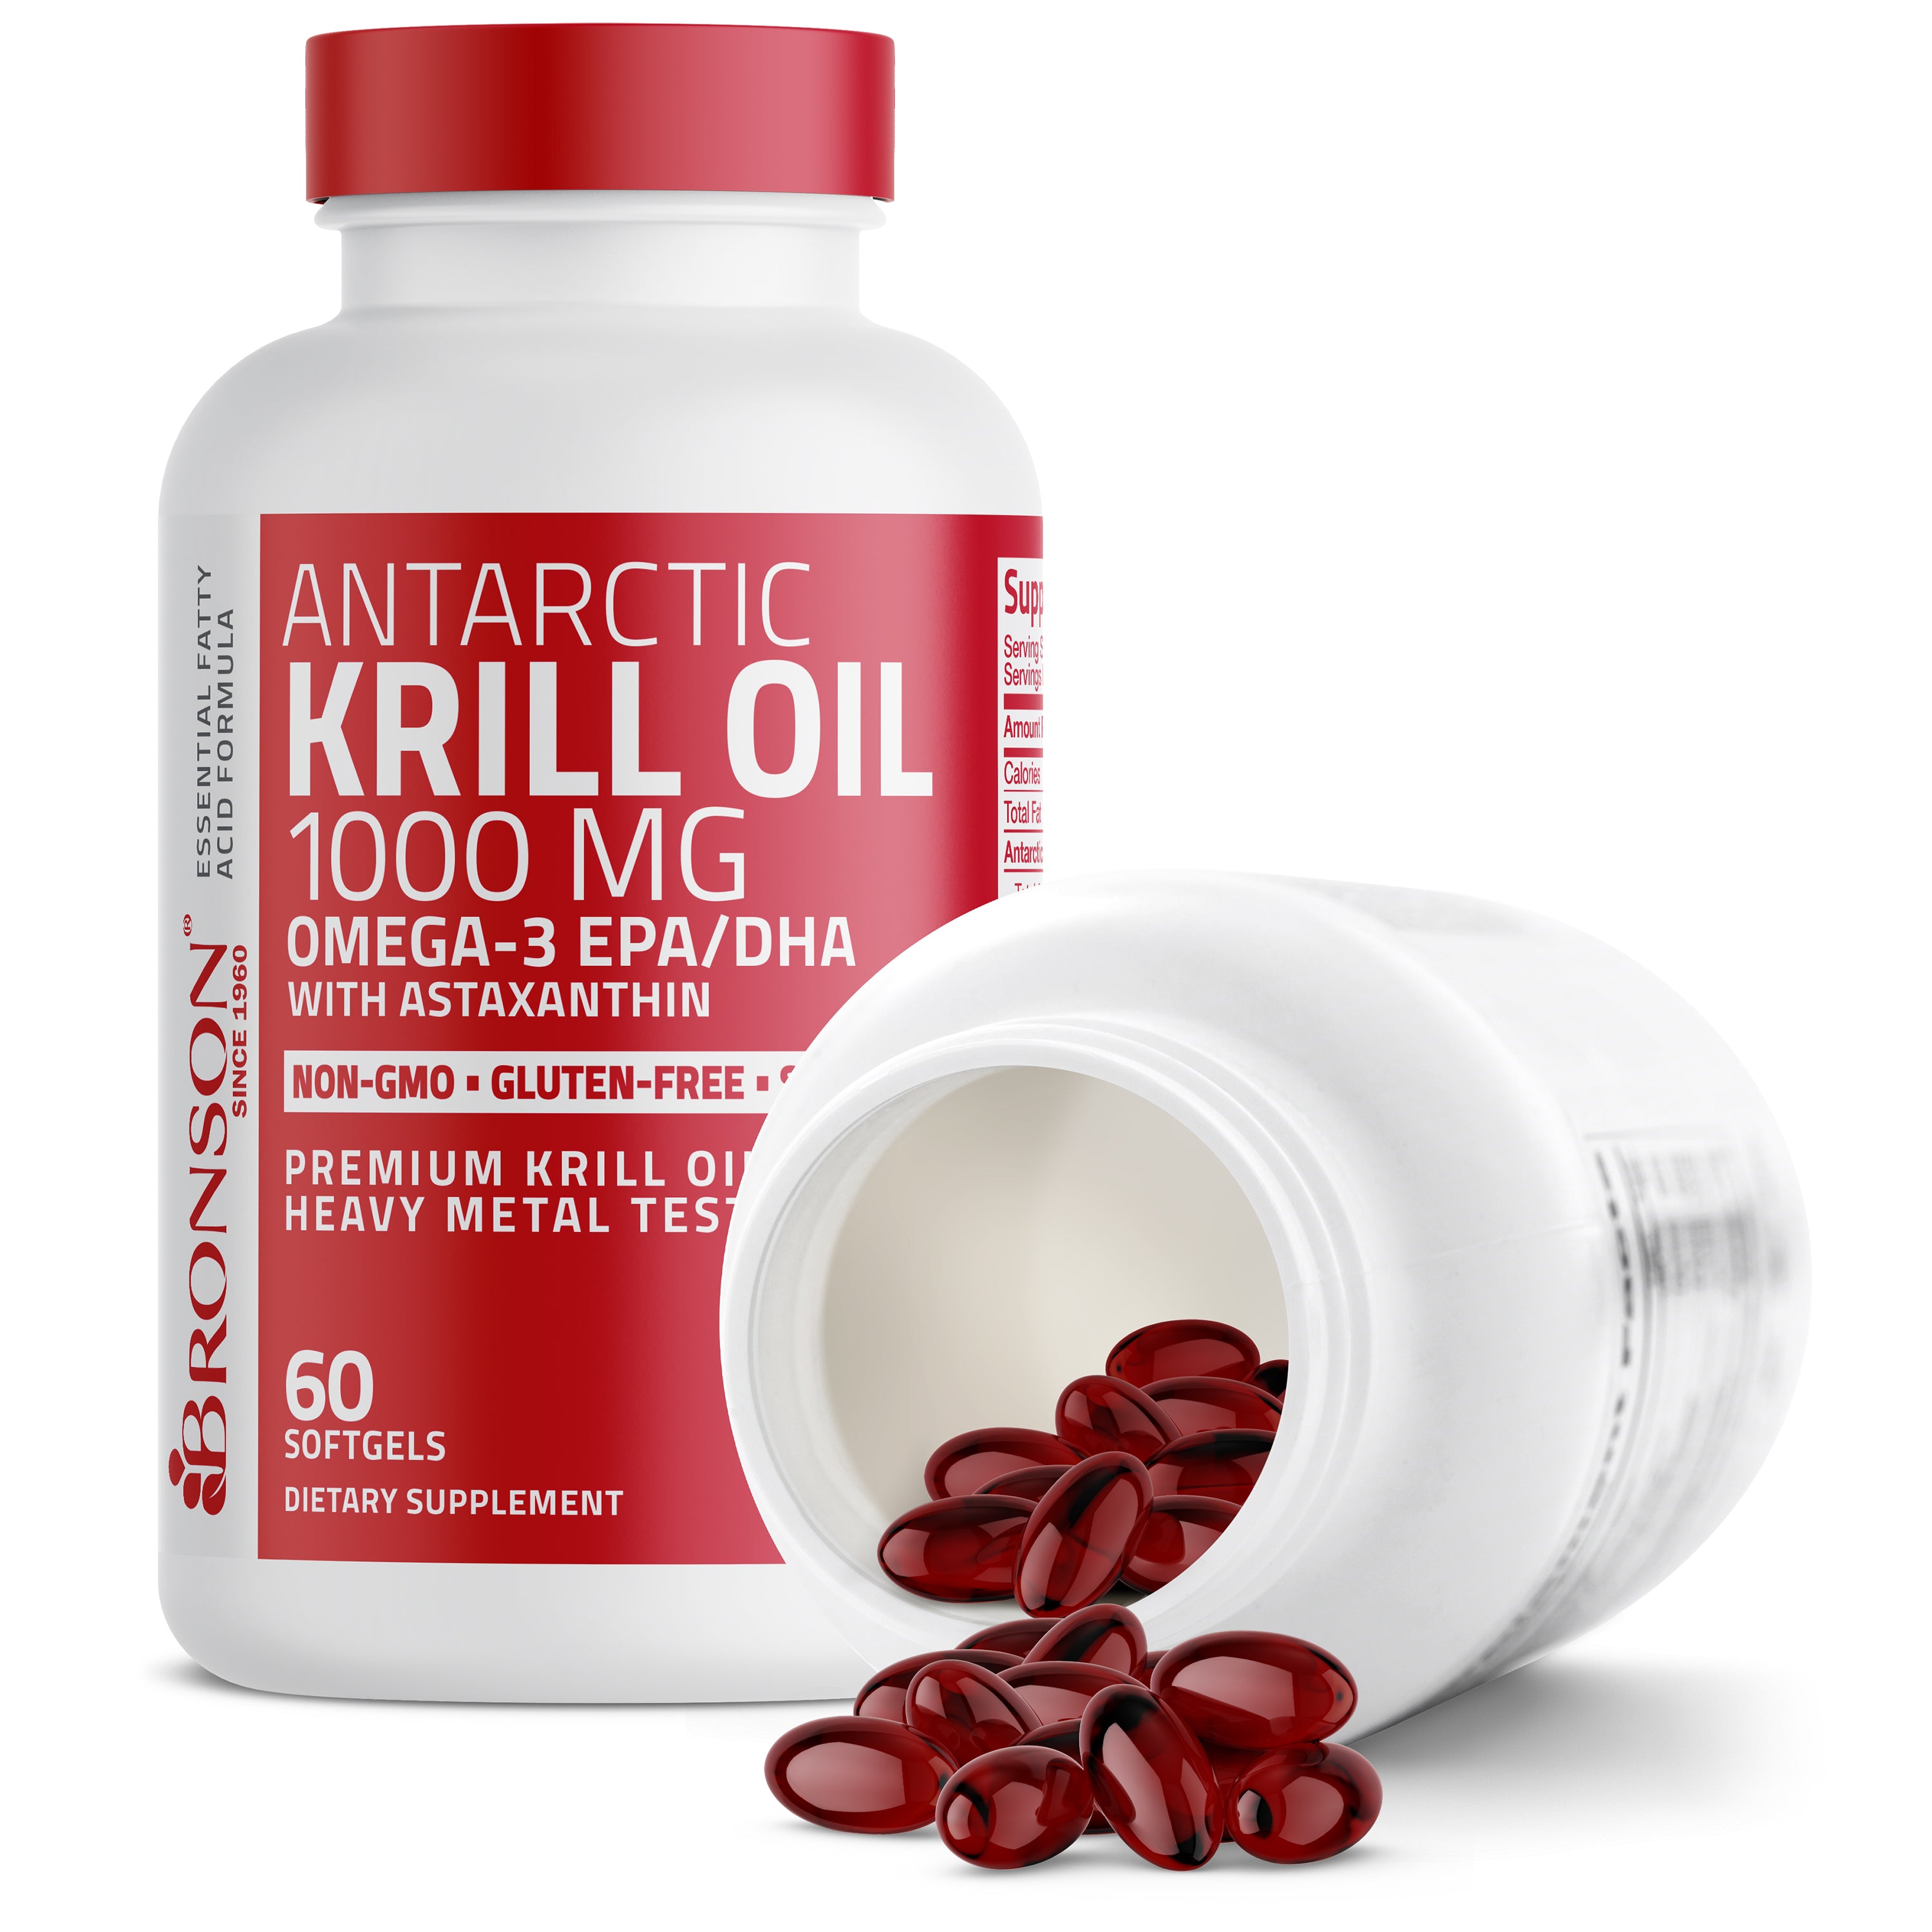 Premium Antarctic Krill Oil Omega-3 EPA DHA Non-GMO - 1,000 mg view 4 of 6